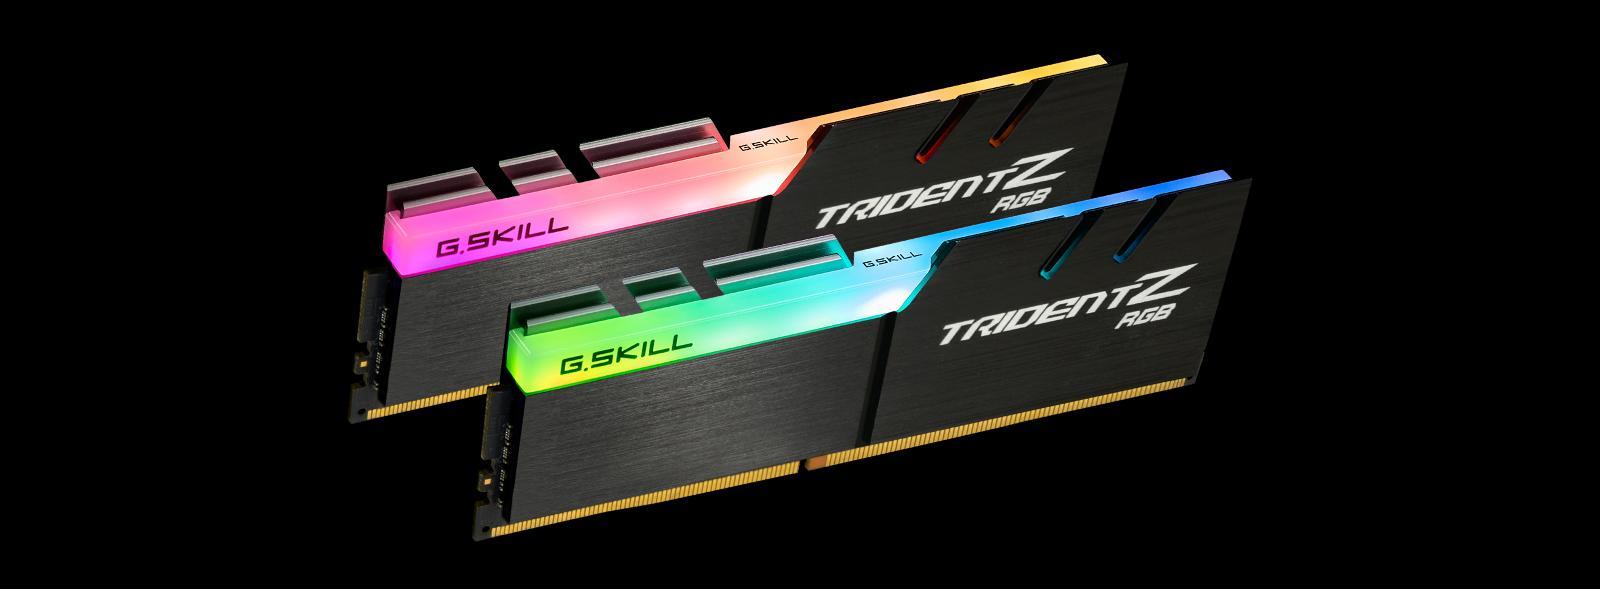 G.Skill Trident Z RGB 8GB DDR4 2400Mhz RGB Desktop RAM Overcloking